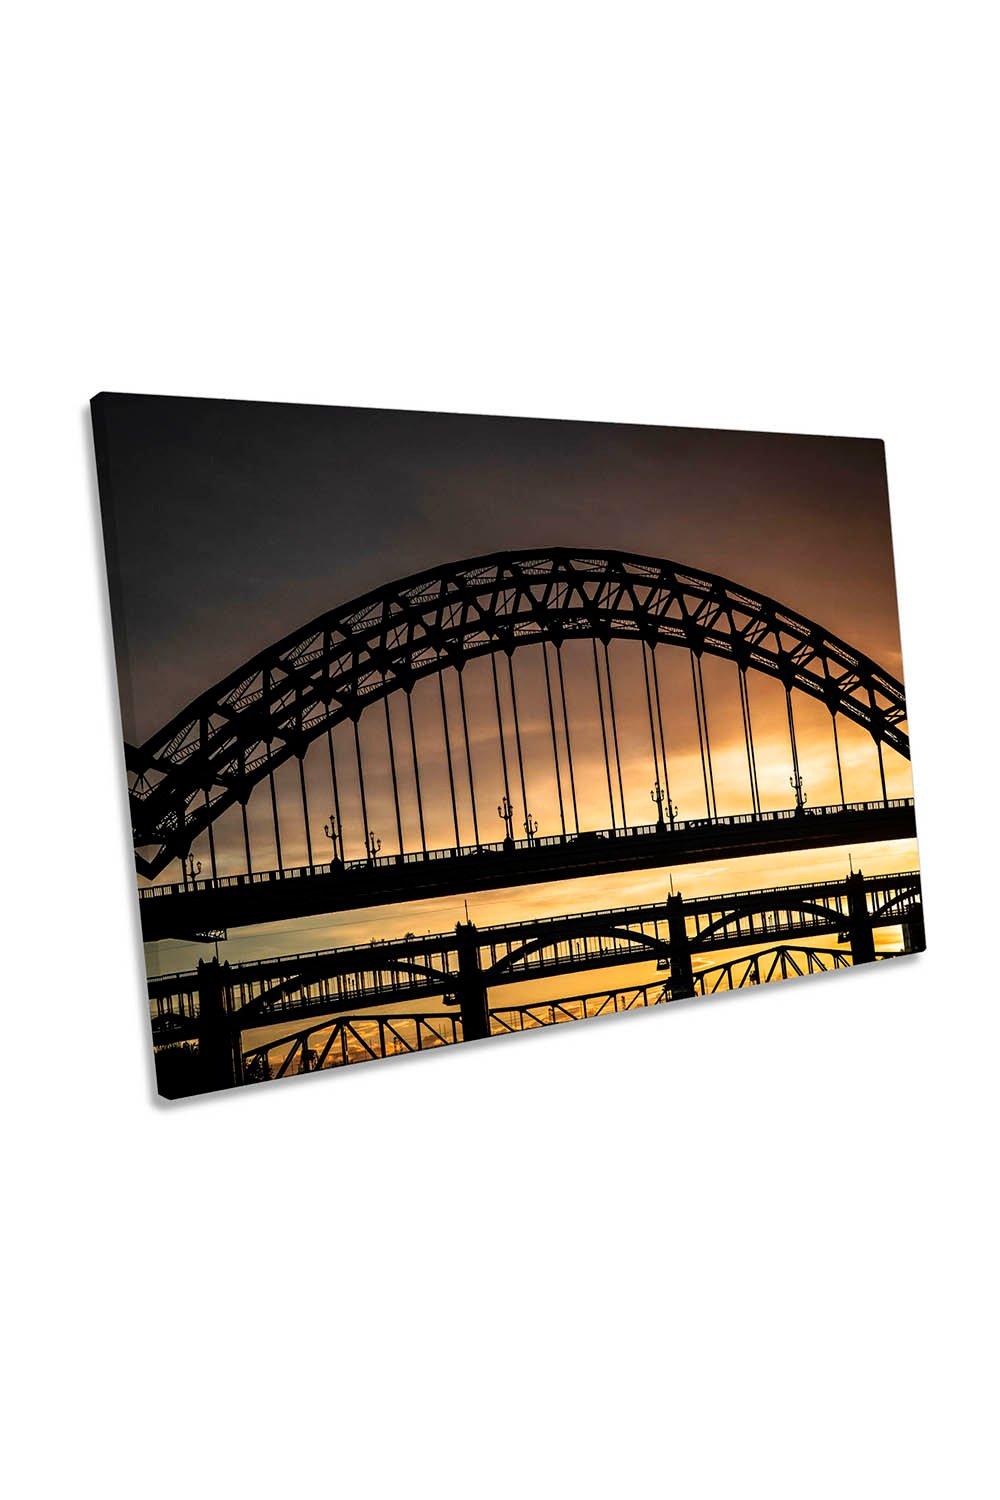 Tyne Bridge Newcastle Sunset City Canvas Wall Art Picture Print